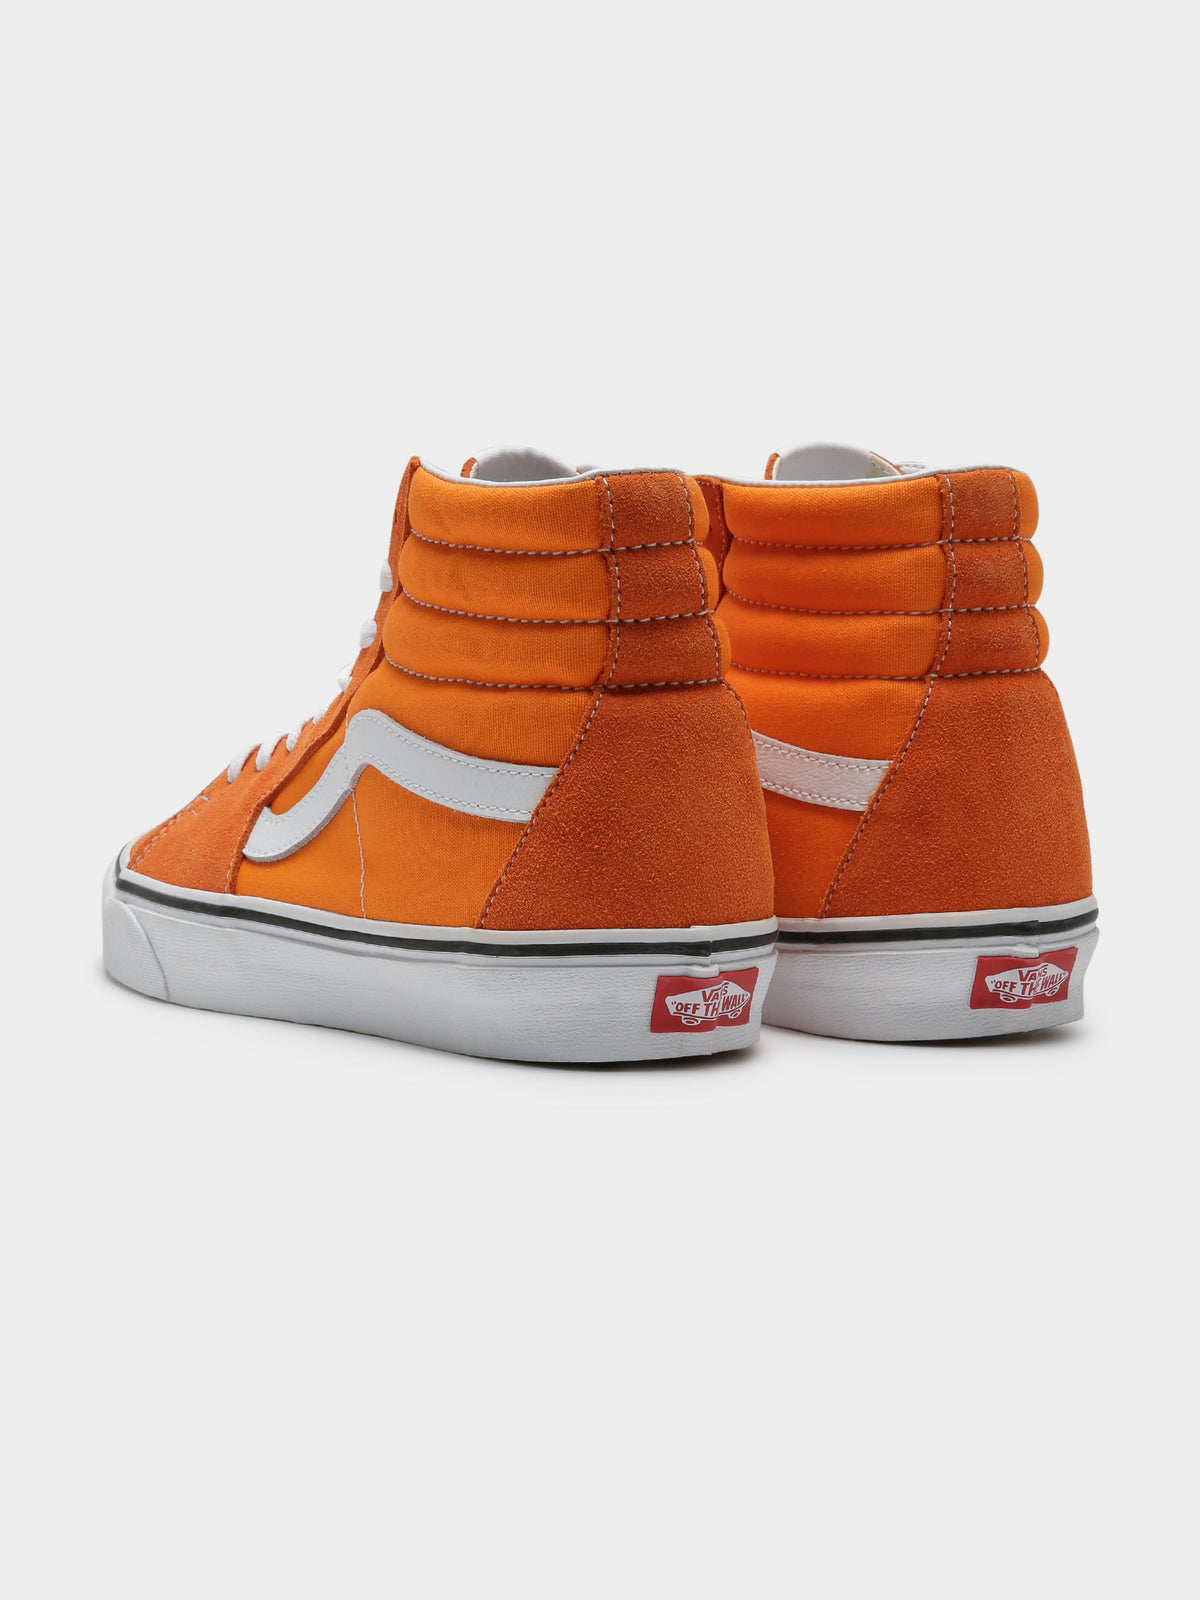 Unisex Sk8 Hi Sneakers in Orange Tiger